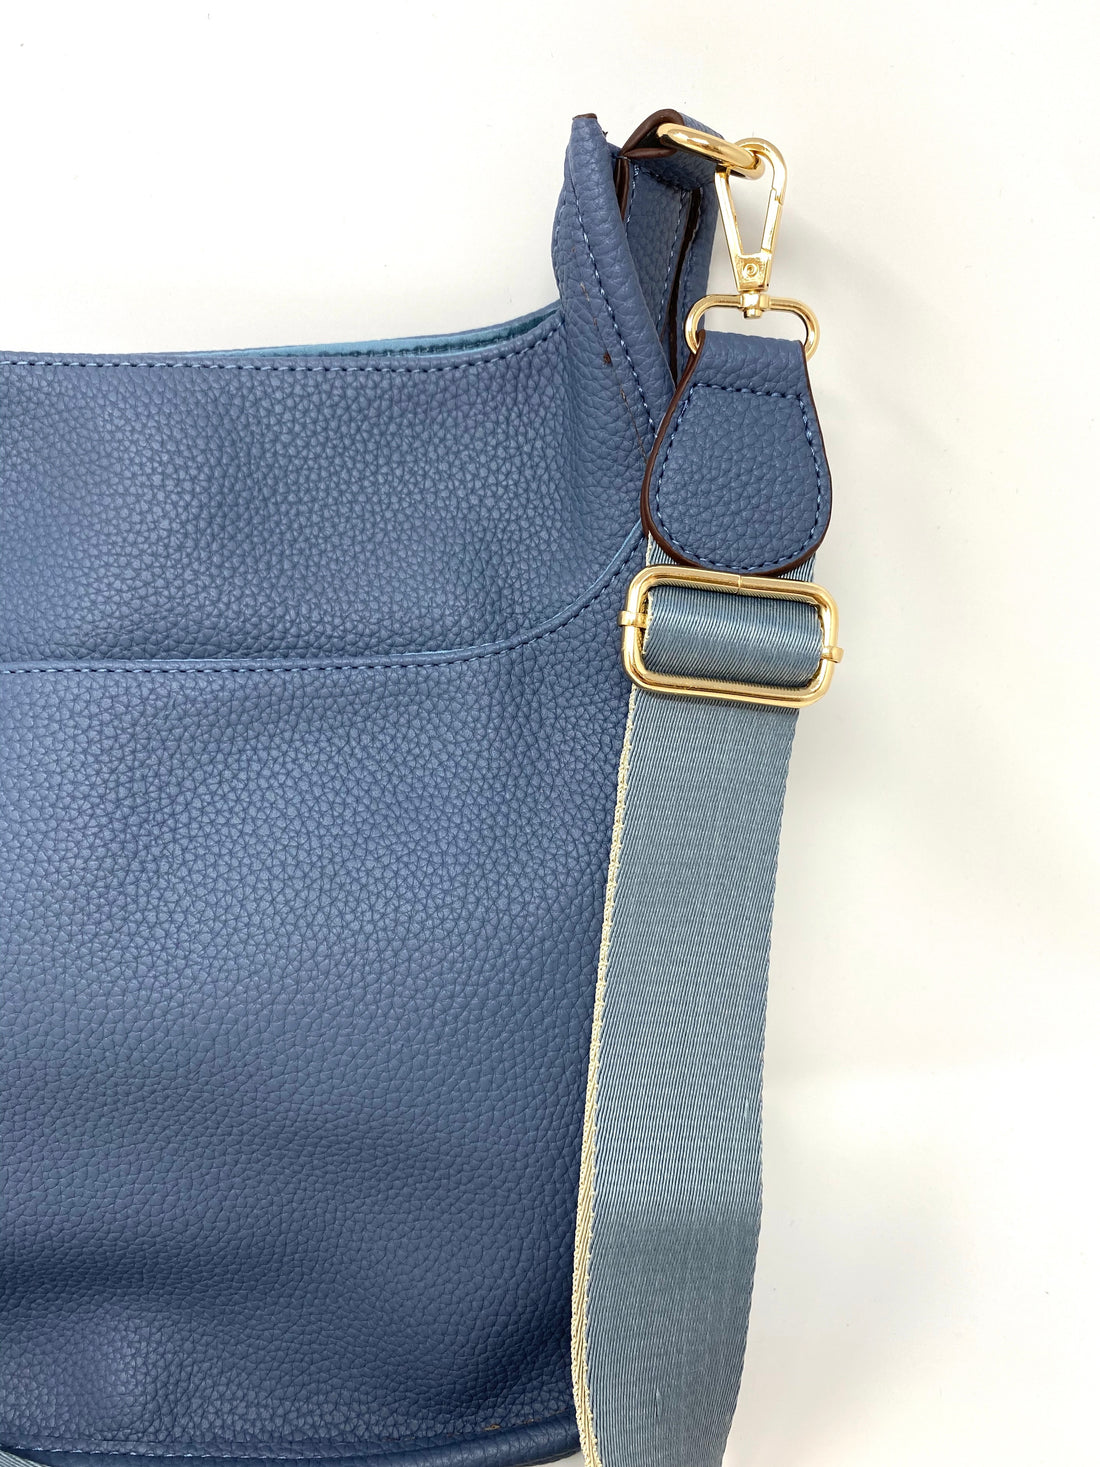 Saddle Bag in Vegan Leather in Denim Blue